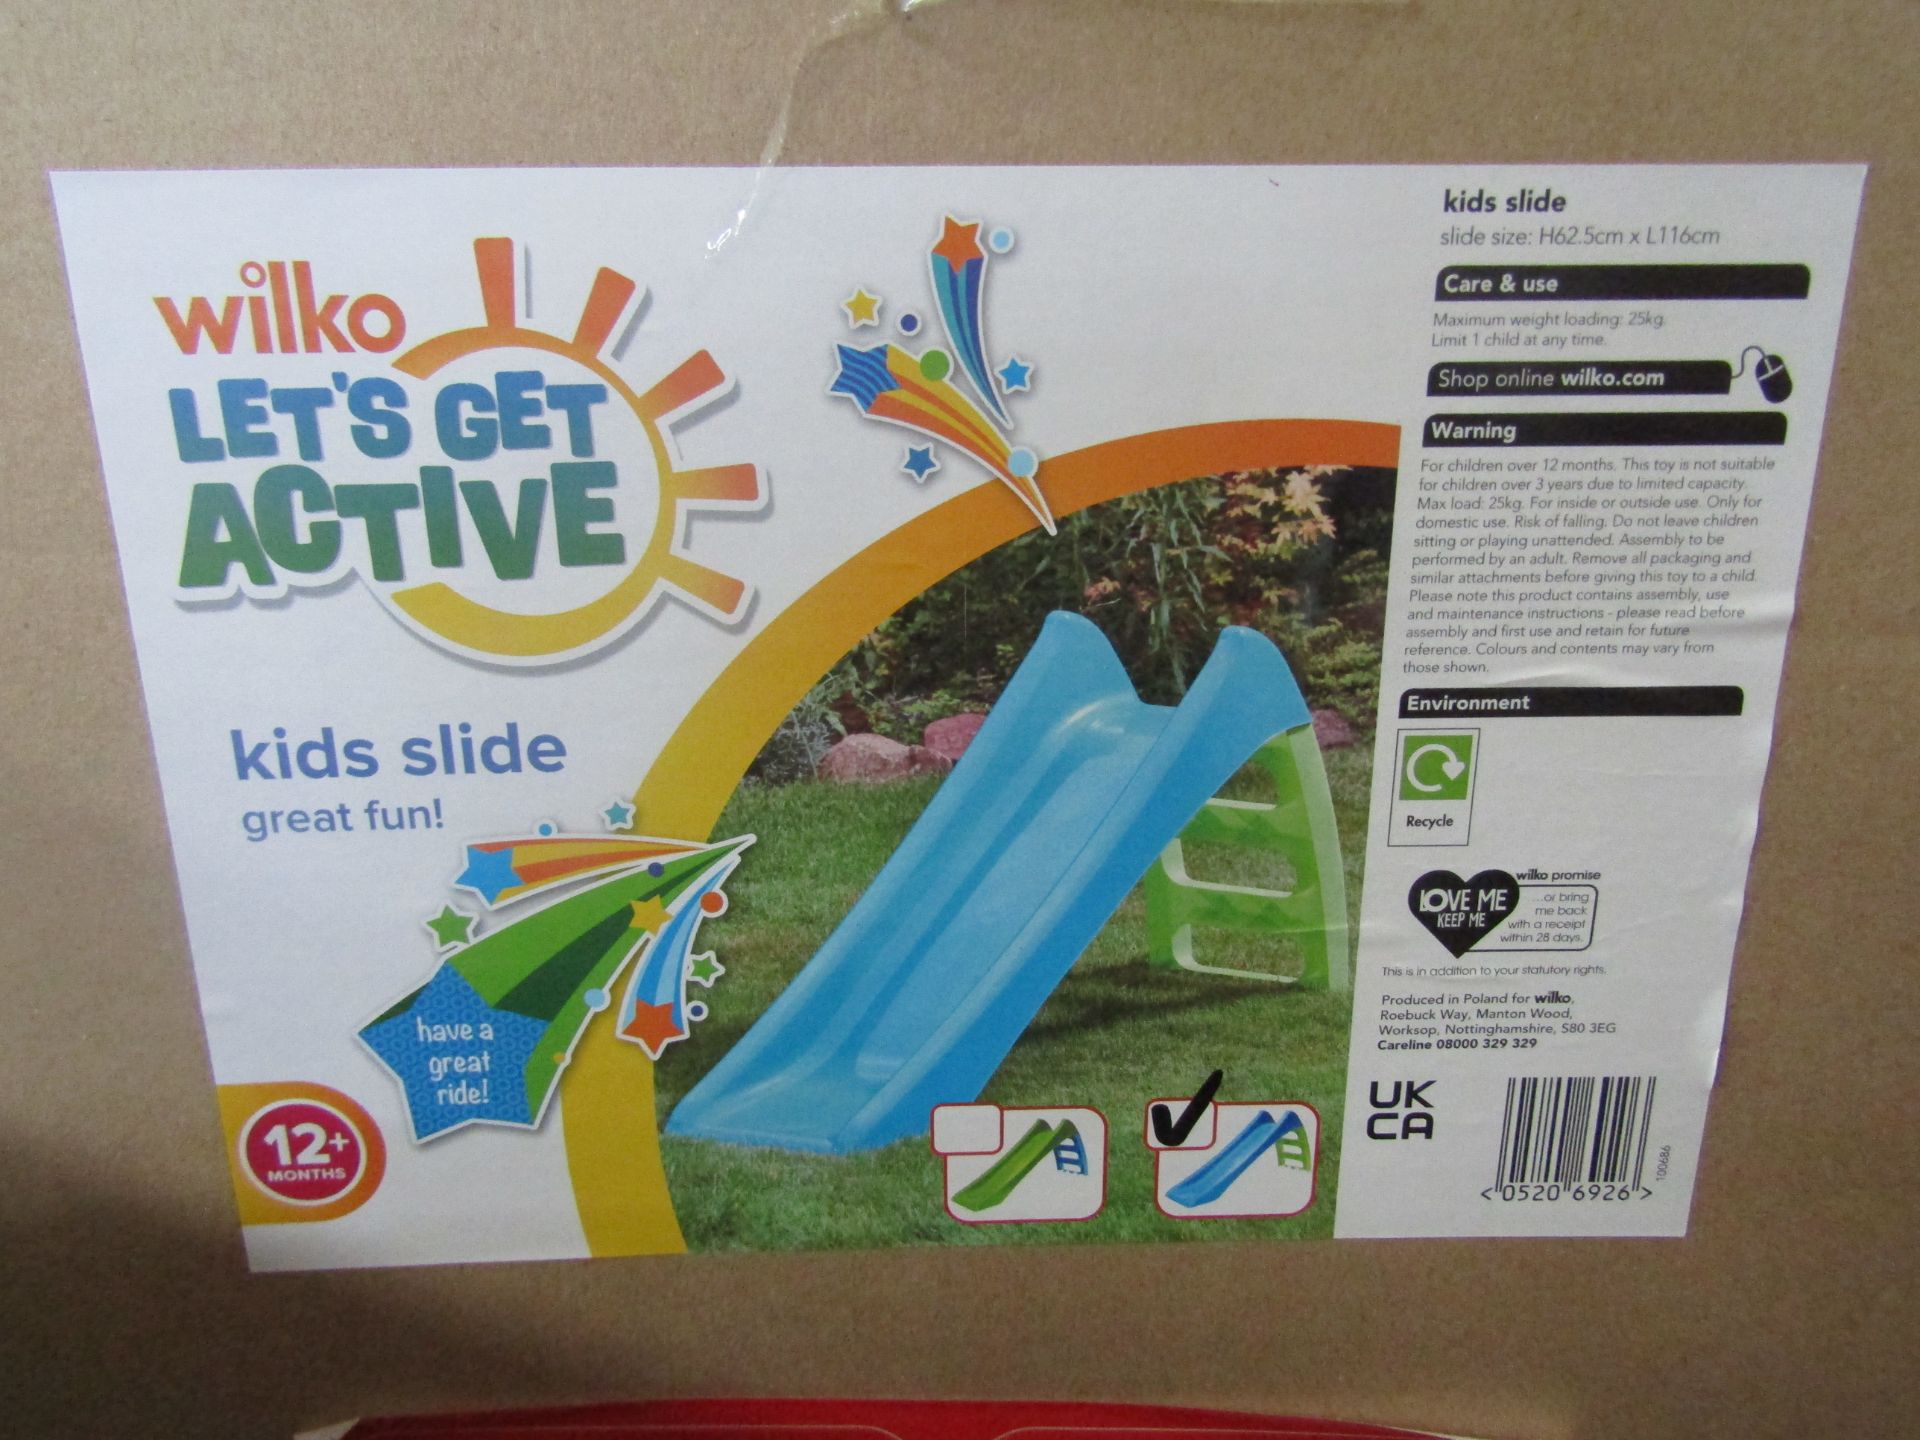 Wilko - Lets Get Active Kids Slide - Slide Size : H62.5 X L116cm - Unchecked & Boxed. - Image For